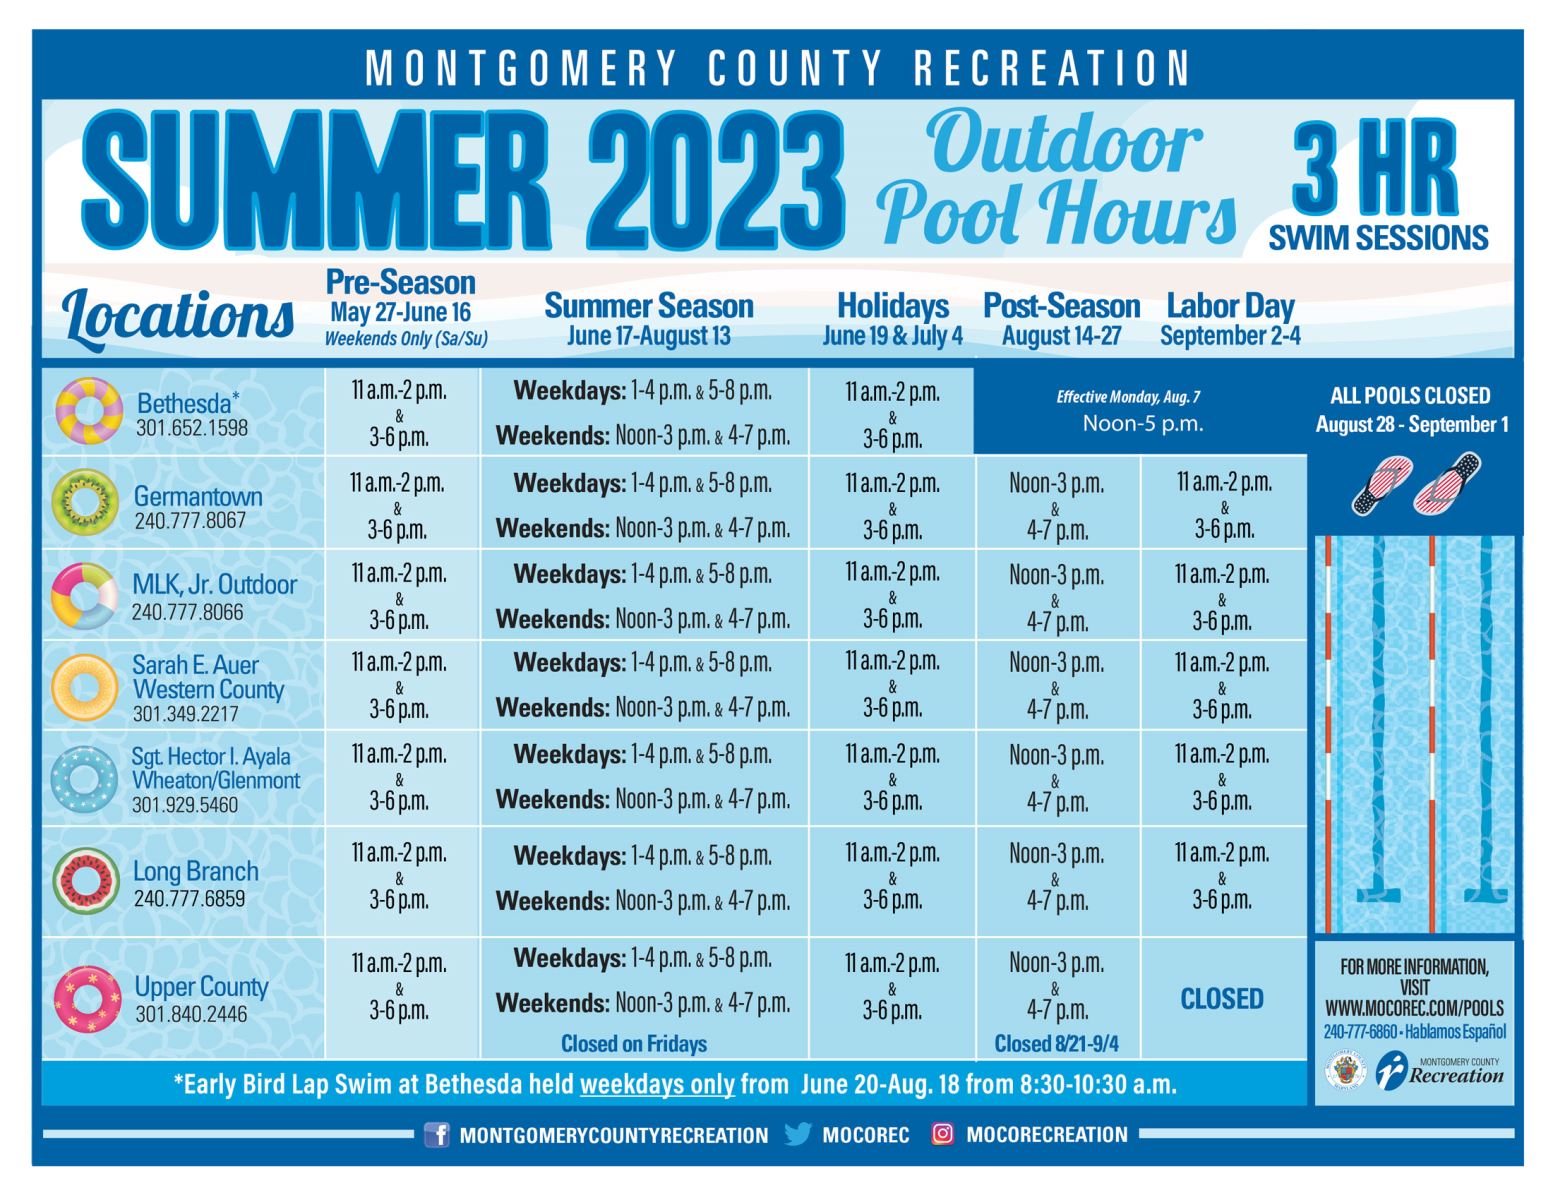 Summer 2023 Outdoor Pool Hours season